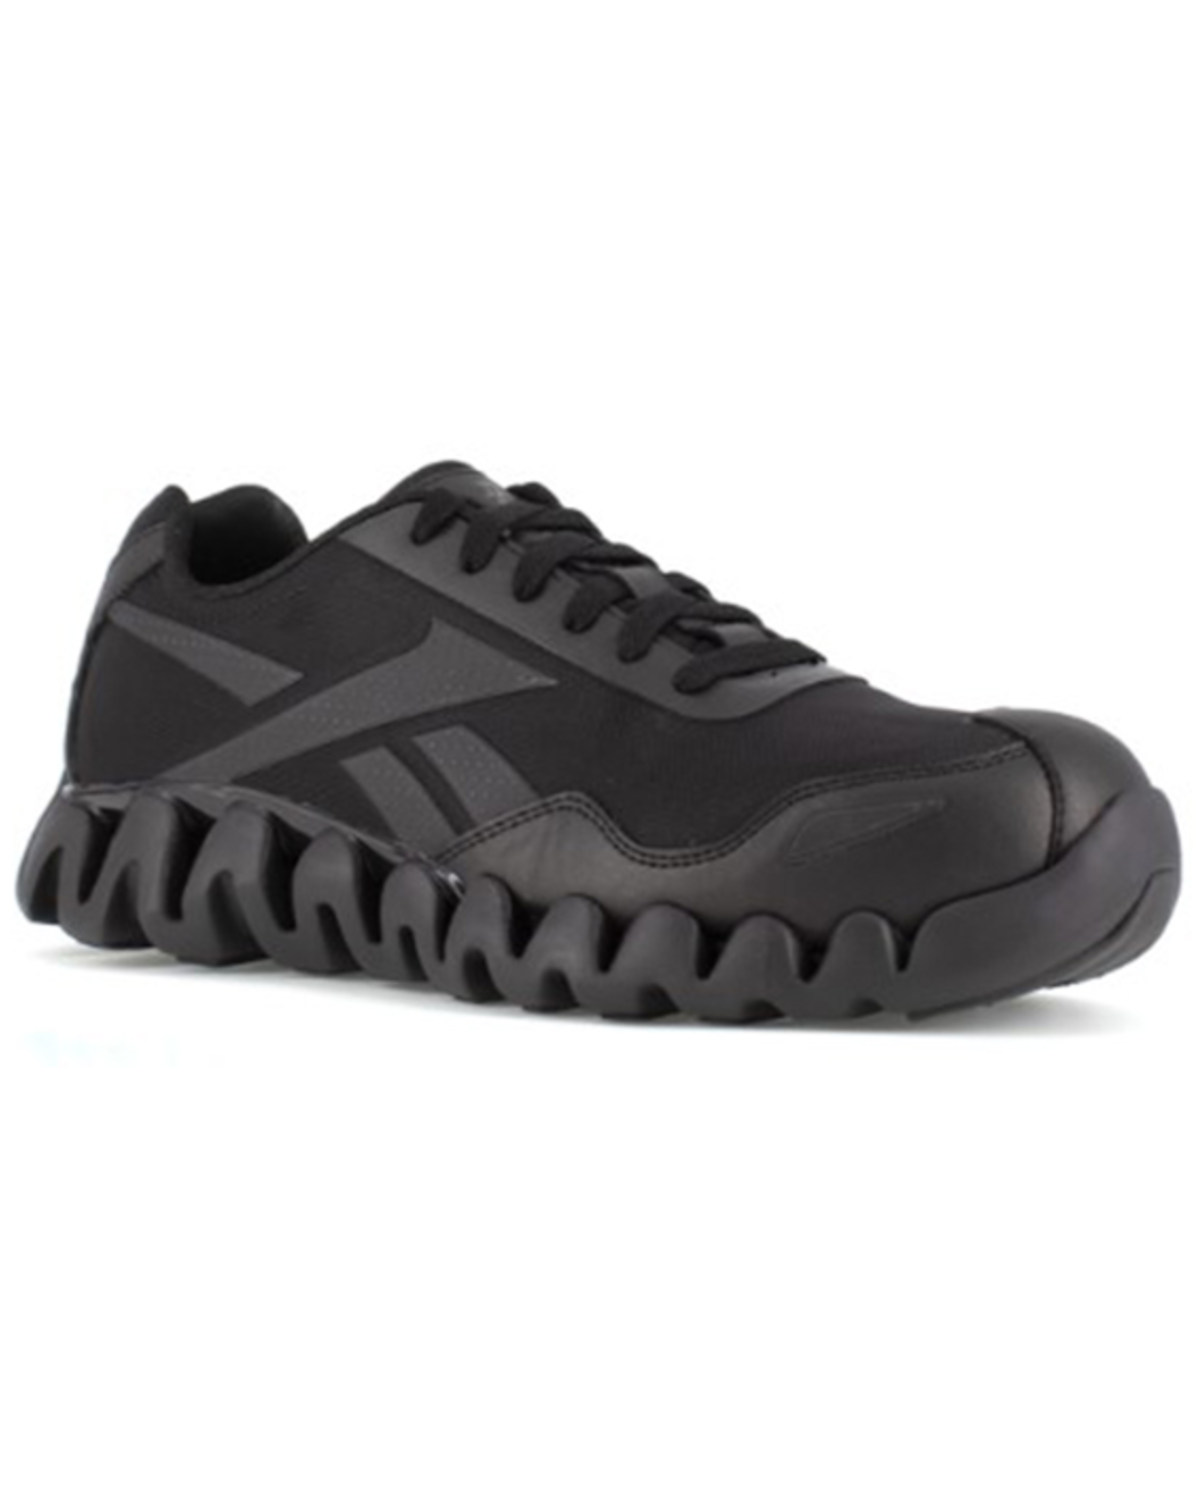 Reebok Women's Zig Pulse Athletic Work Sneakers - Composite Toe